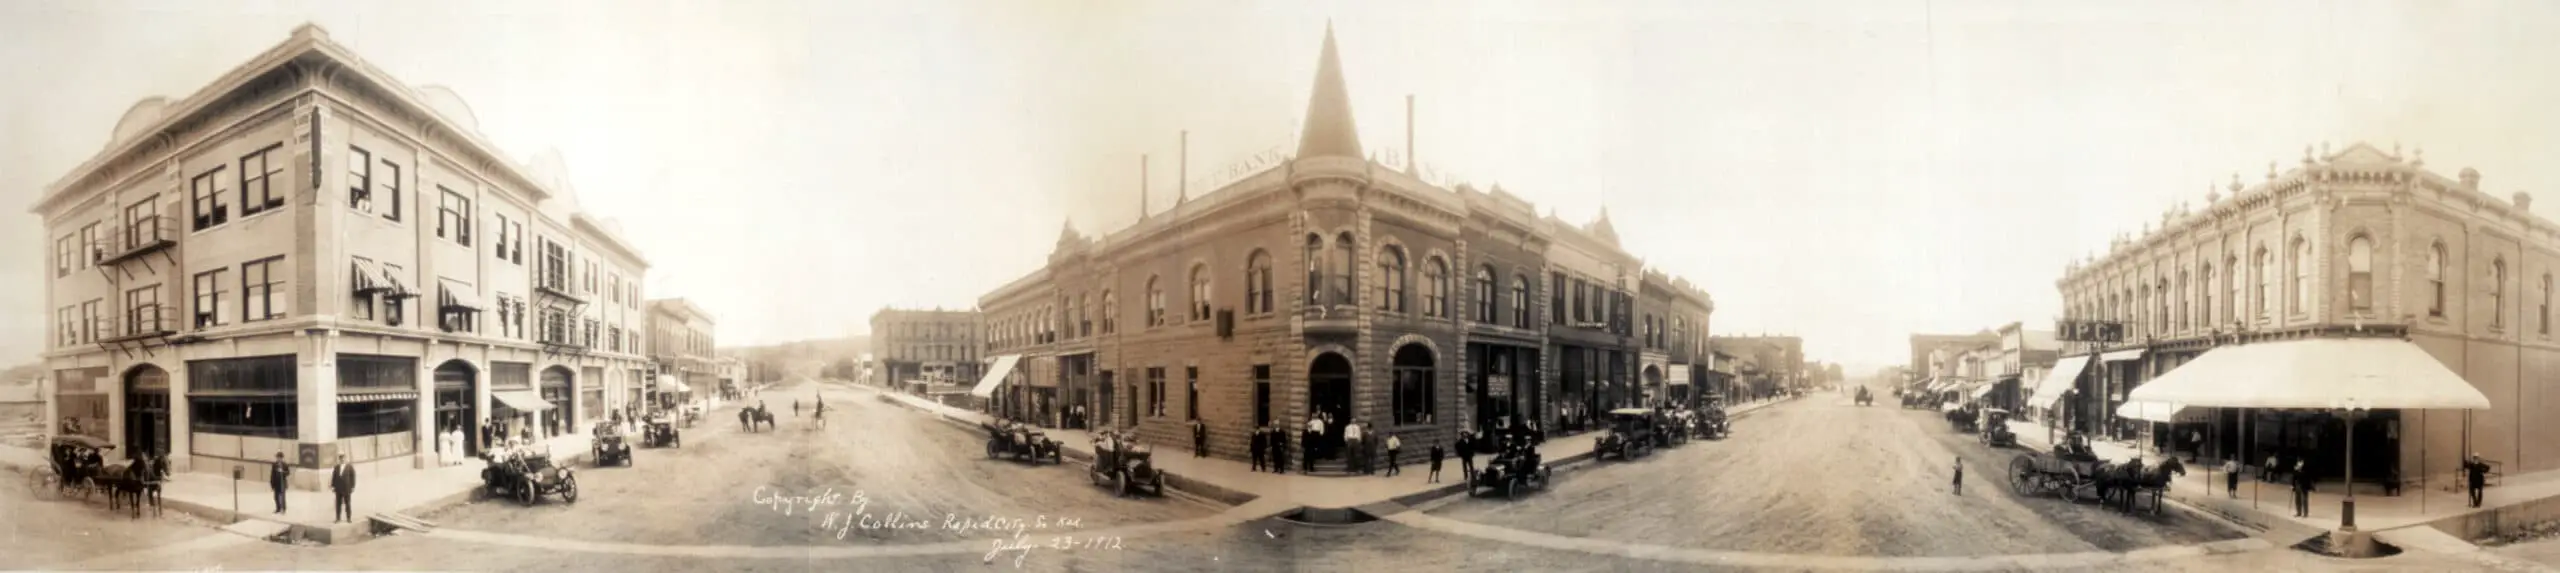 Rapid City, South Dakota 1912